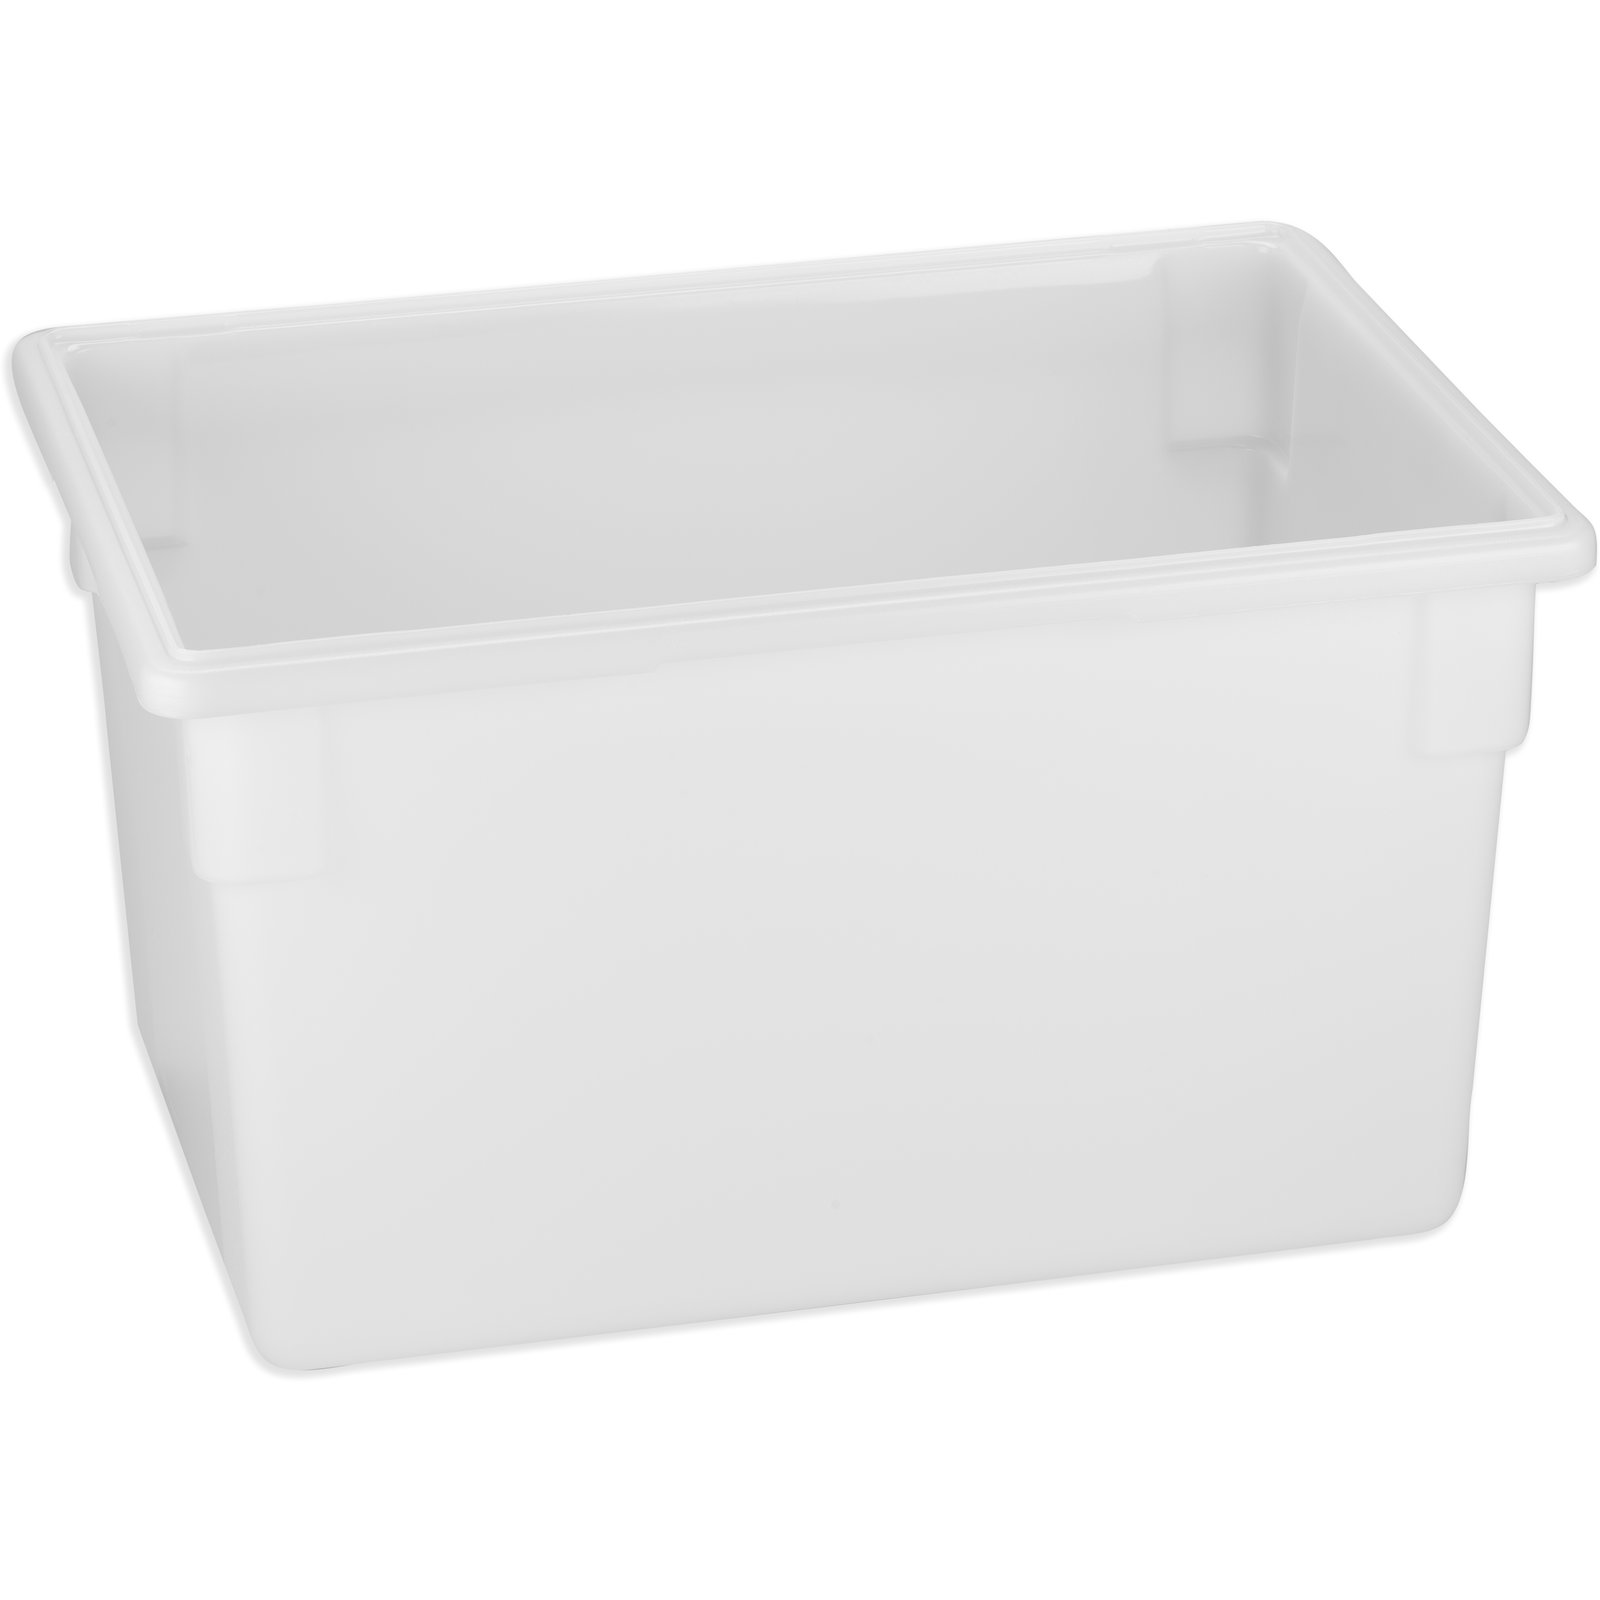 1162201 - Food Container, Plastic, White, 4.7 l